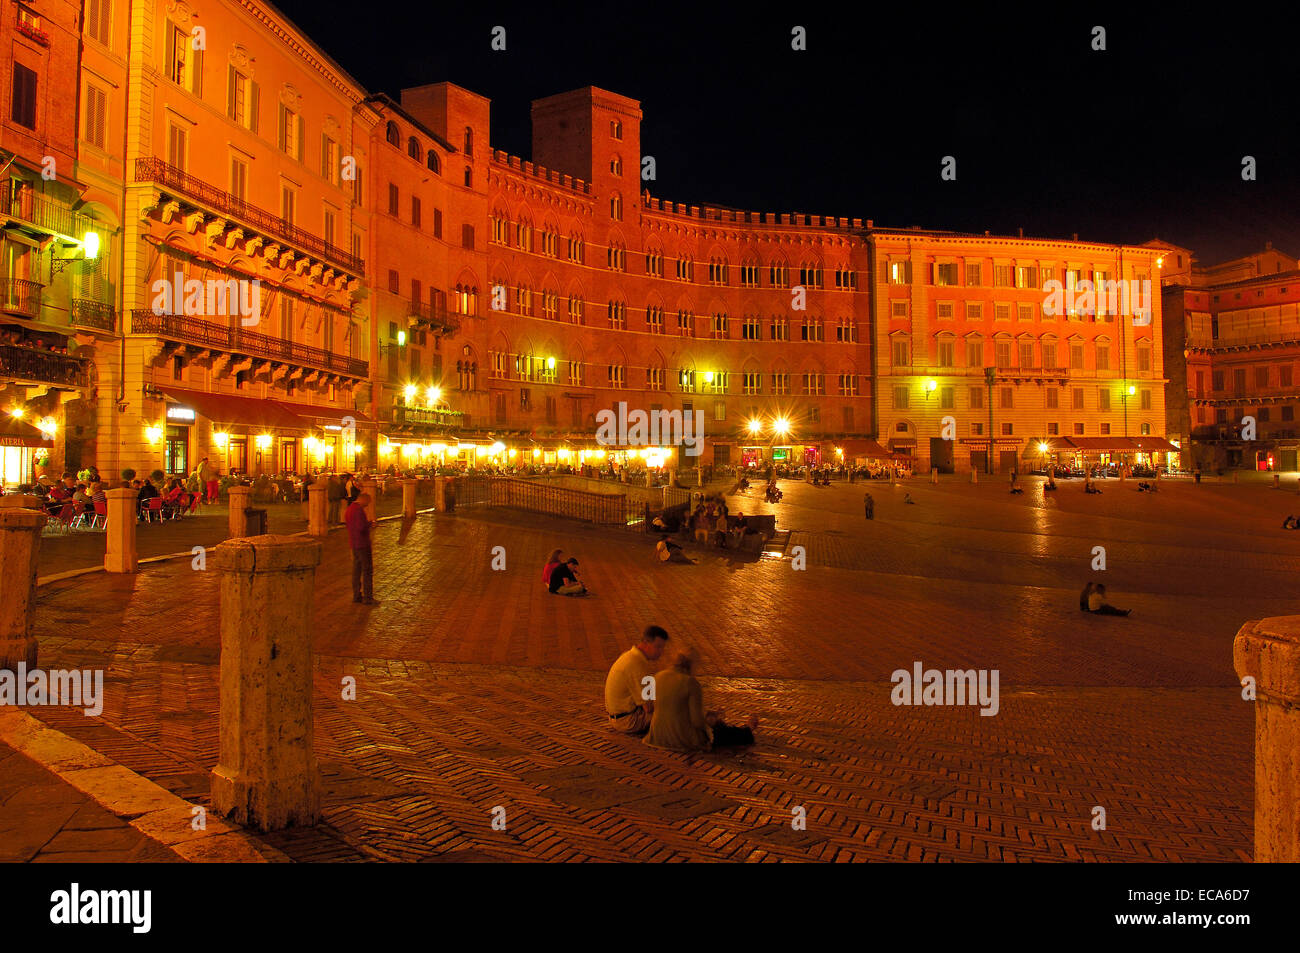 Piazza del campo square at night, Siena, Tuscany, Italy, Europe Stock Photo